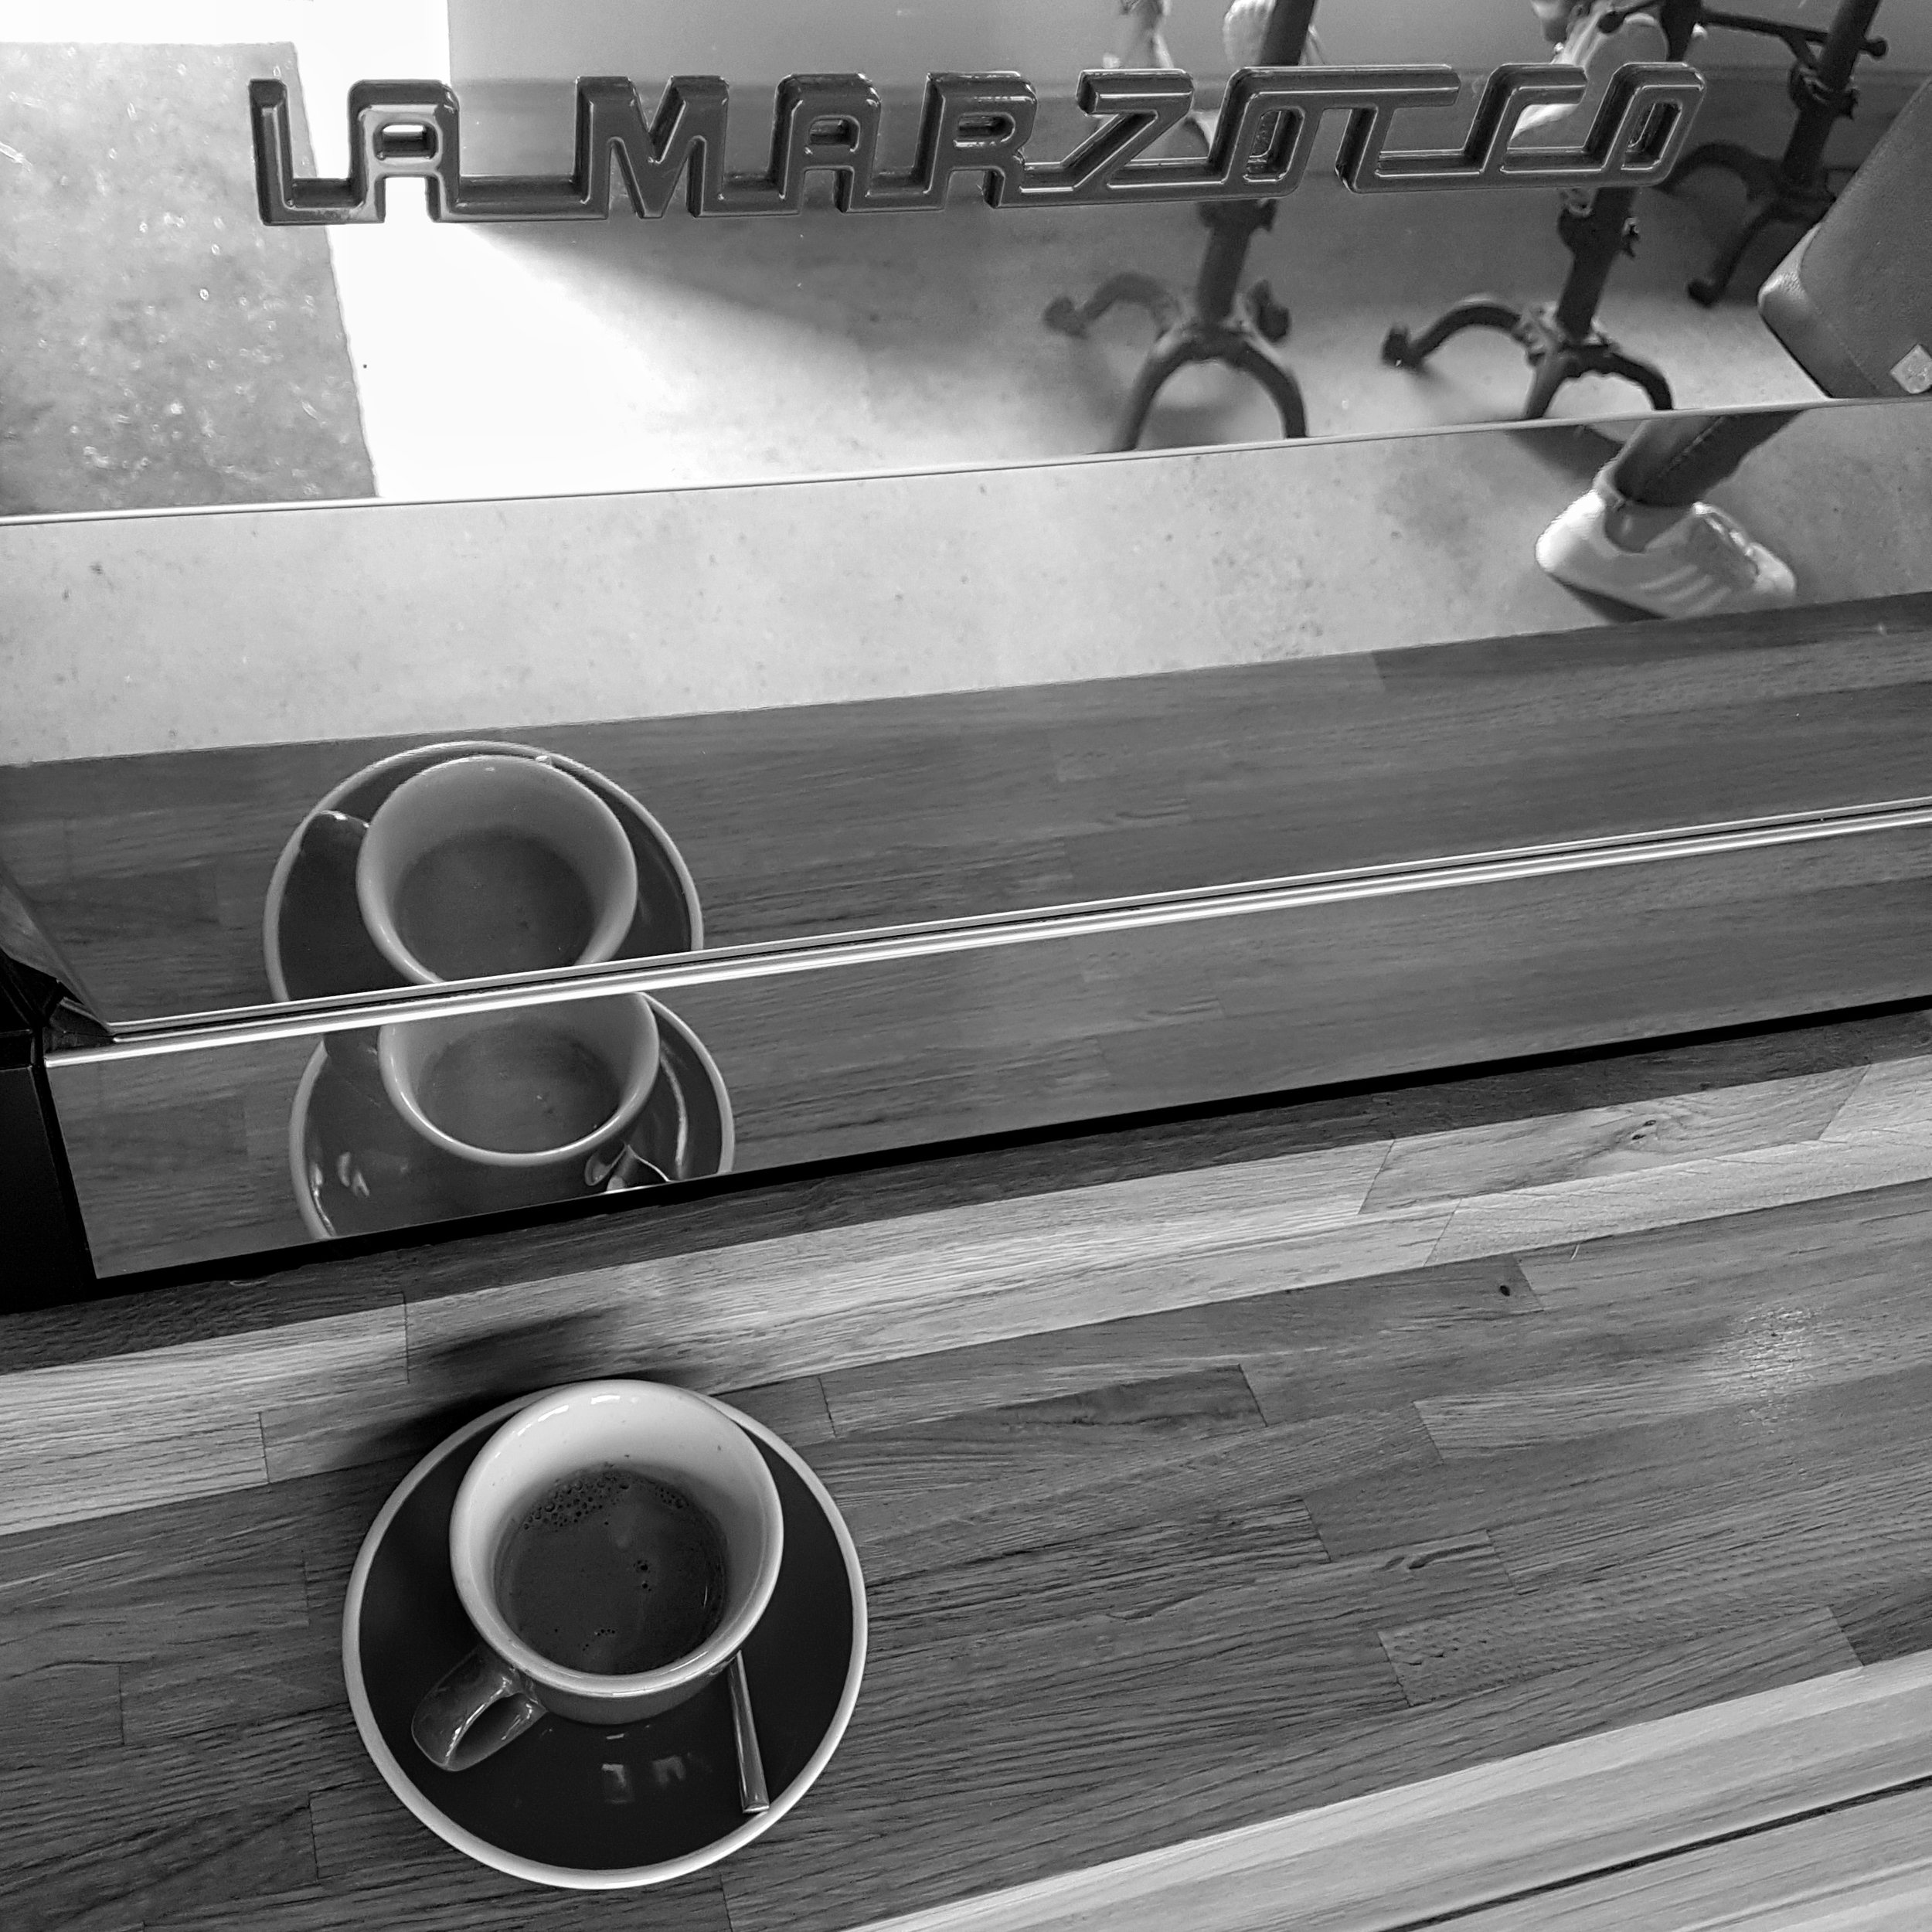 A shot of espresso sits on a counter in front of a shiny La Marzocco espresso machine